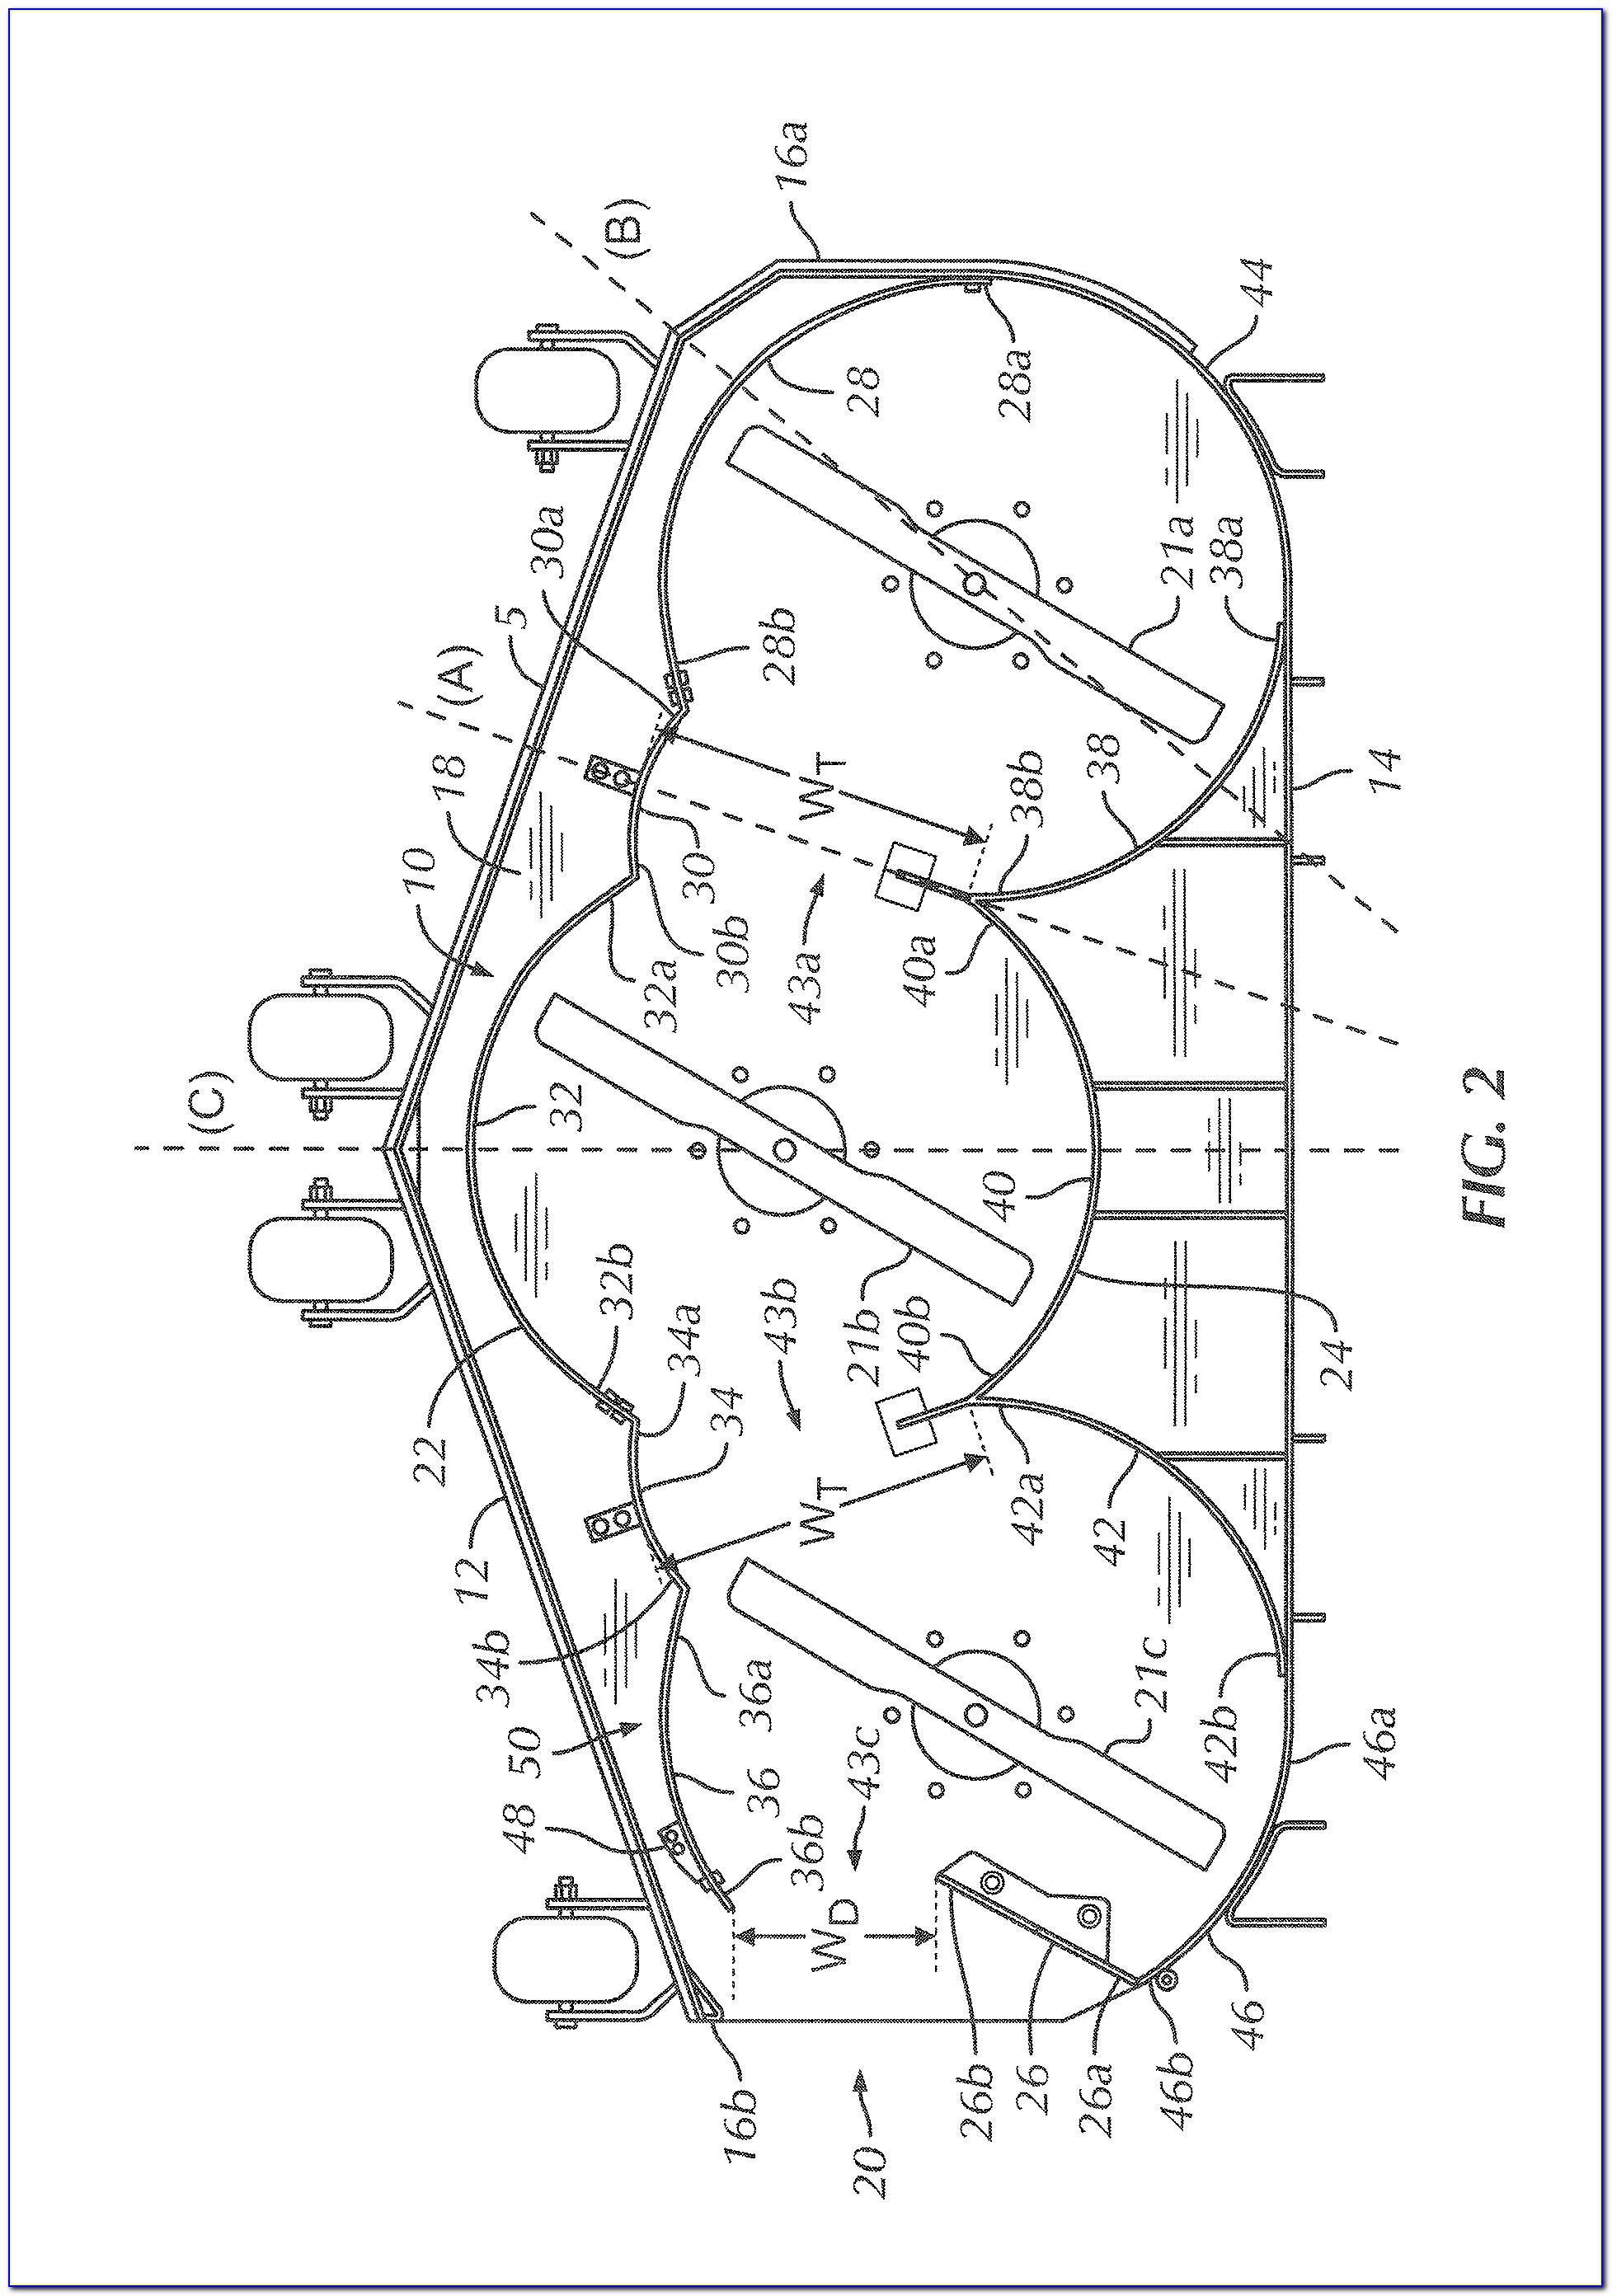 F96t12 Ballast Wiring Diagram